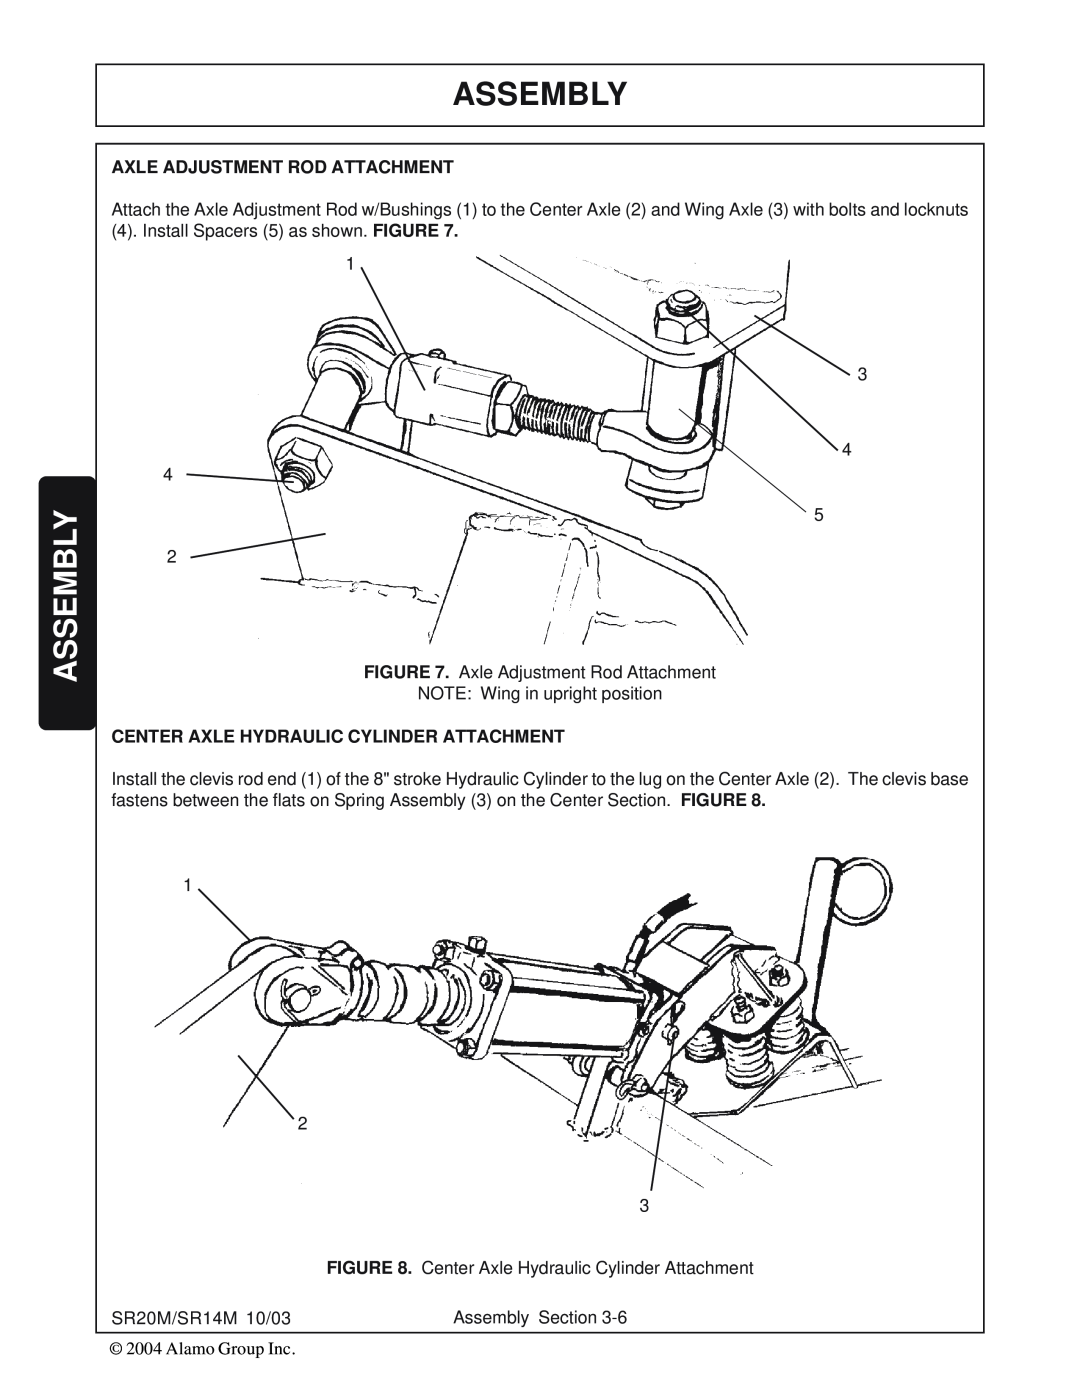 Alamo SR20, SR14 manual Assembly, Axle Adjustment Rod Attachment, Center Axle Hydraulic Cylinder Attachment 